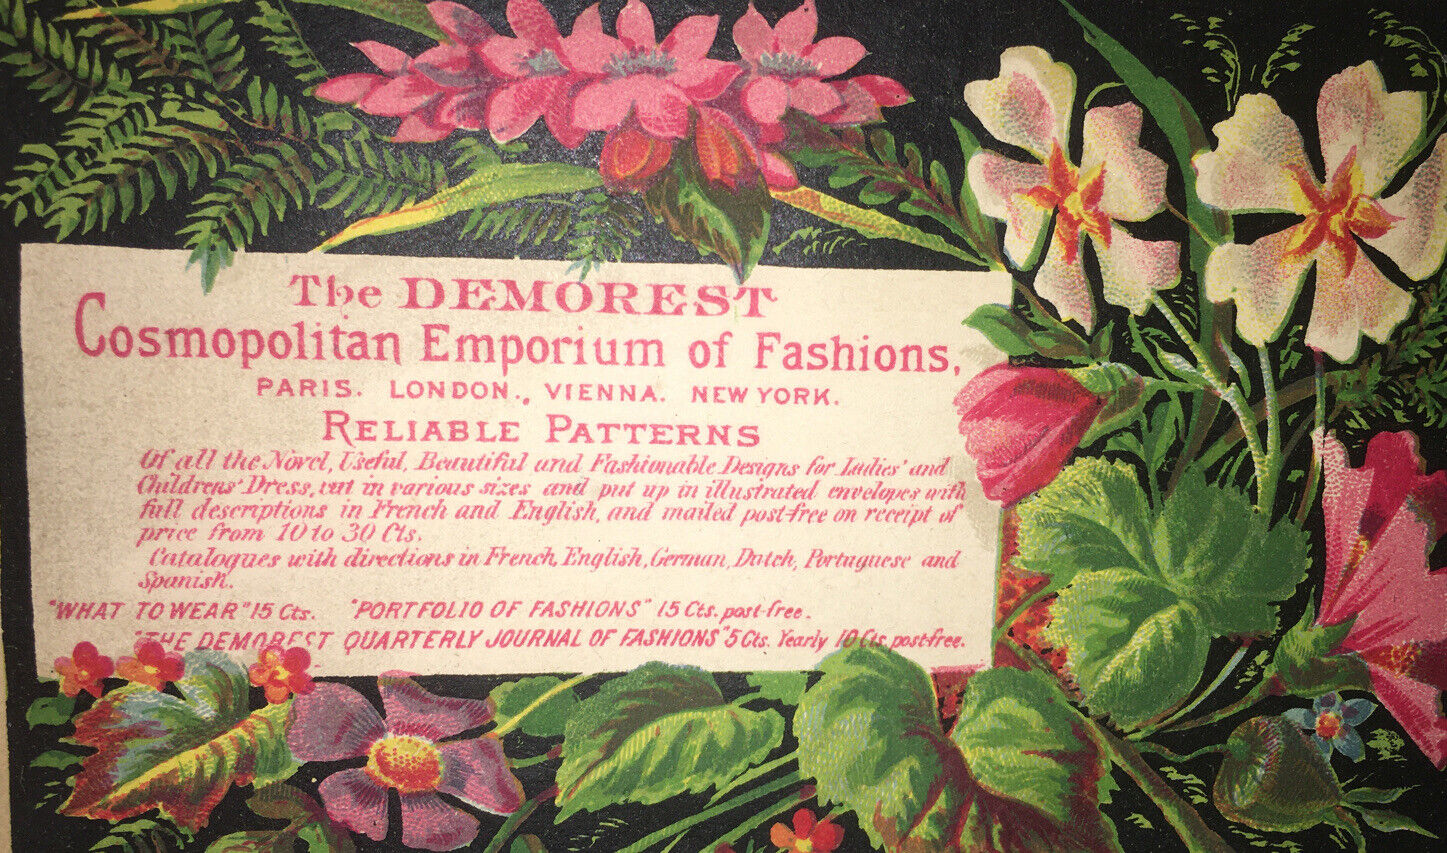 1880 Demorest Cosmopolitan Emporium of Fashions Patterns NY London Vienna Paris